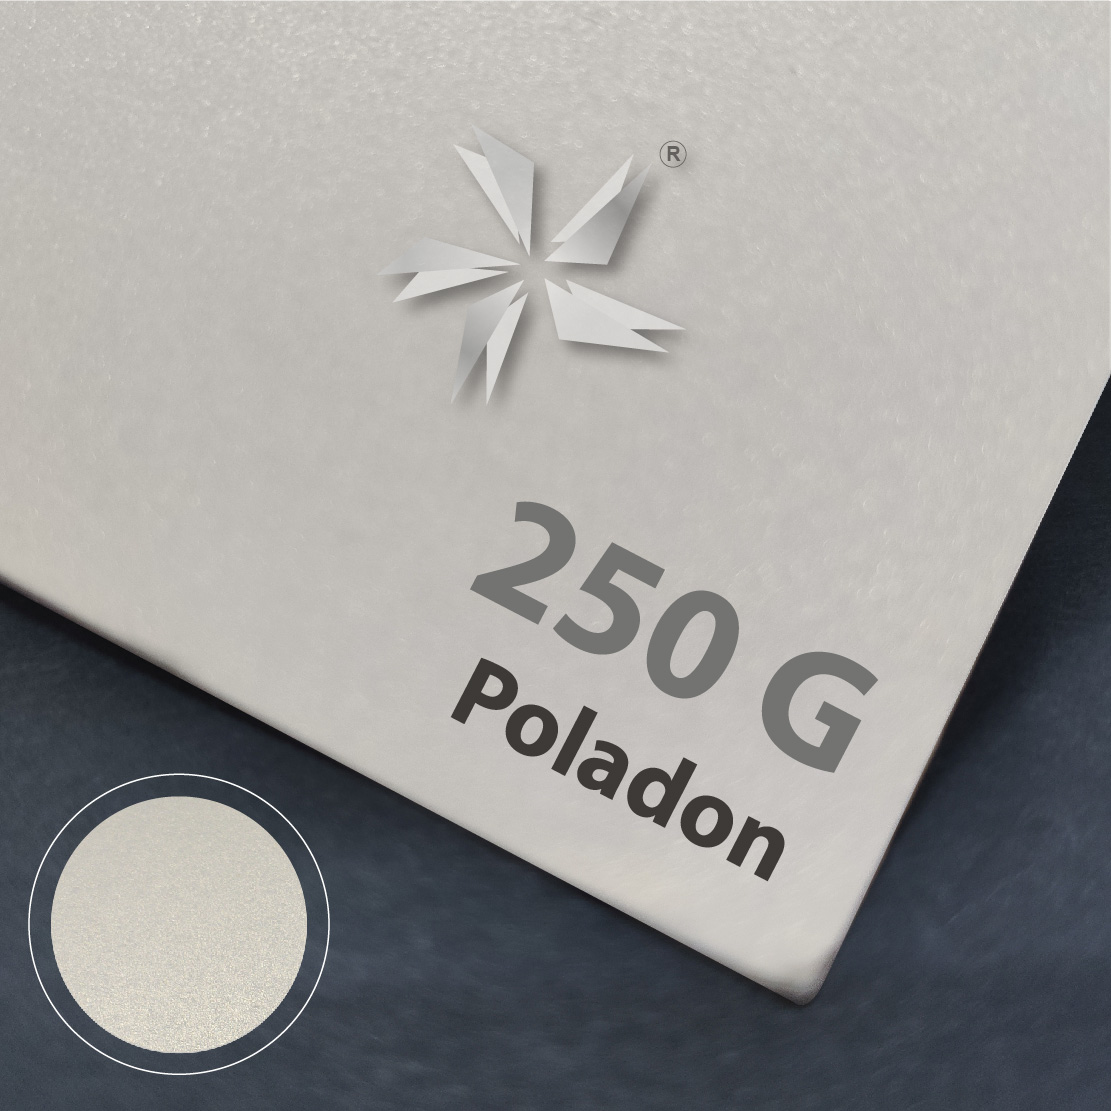 Metalic Gold Poladon Card 250g